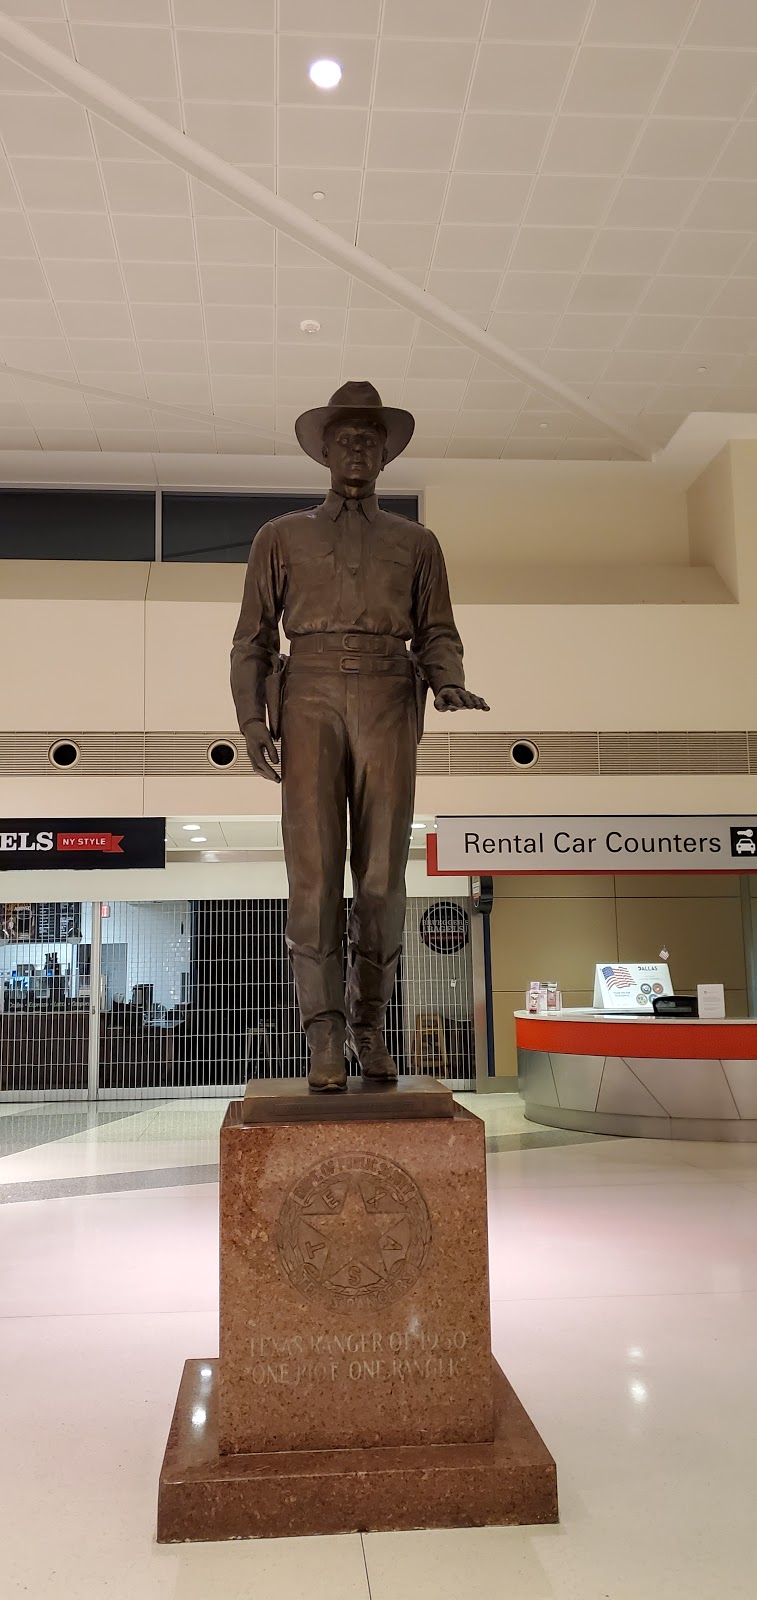 Dallas Love Field Airport | 8008 Herb Kelleher Way, Dallas, TX 75235, USA | Phone: (214) 670-5683